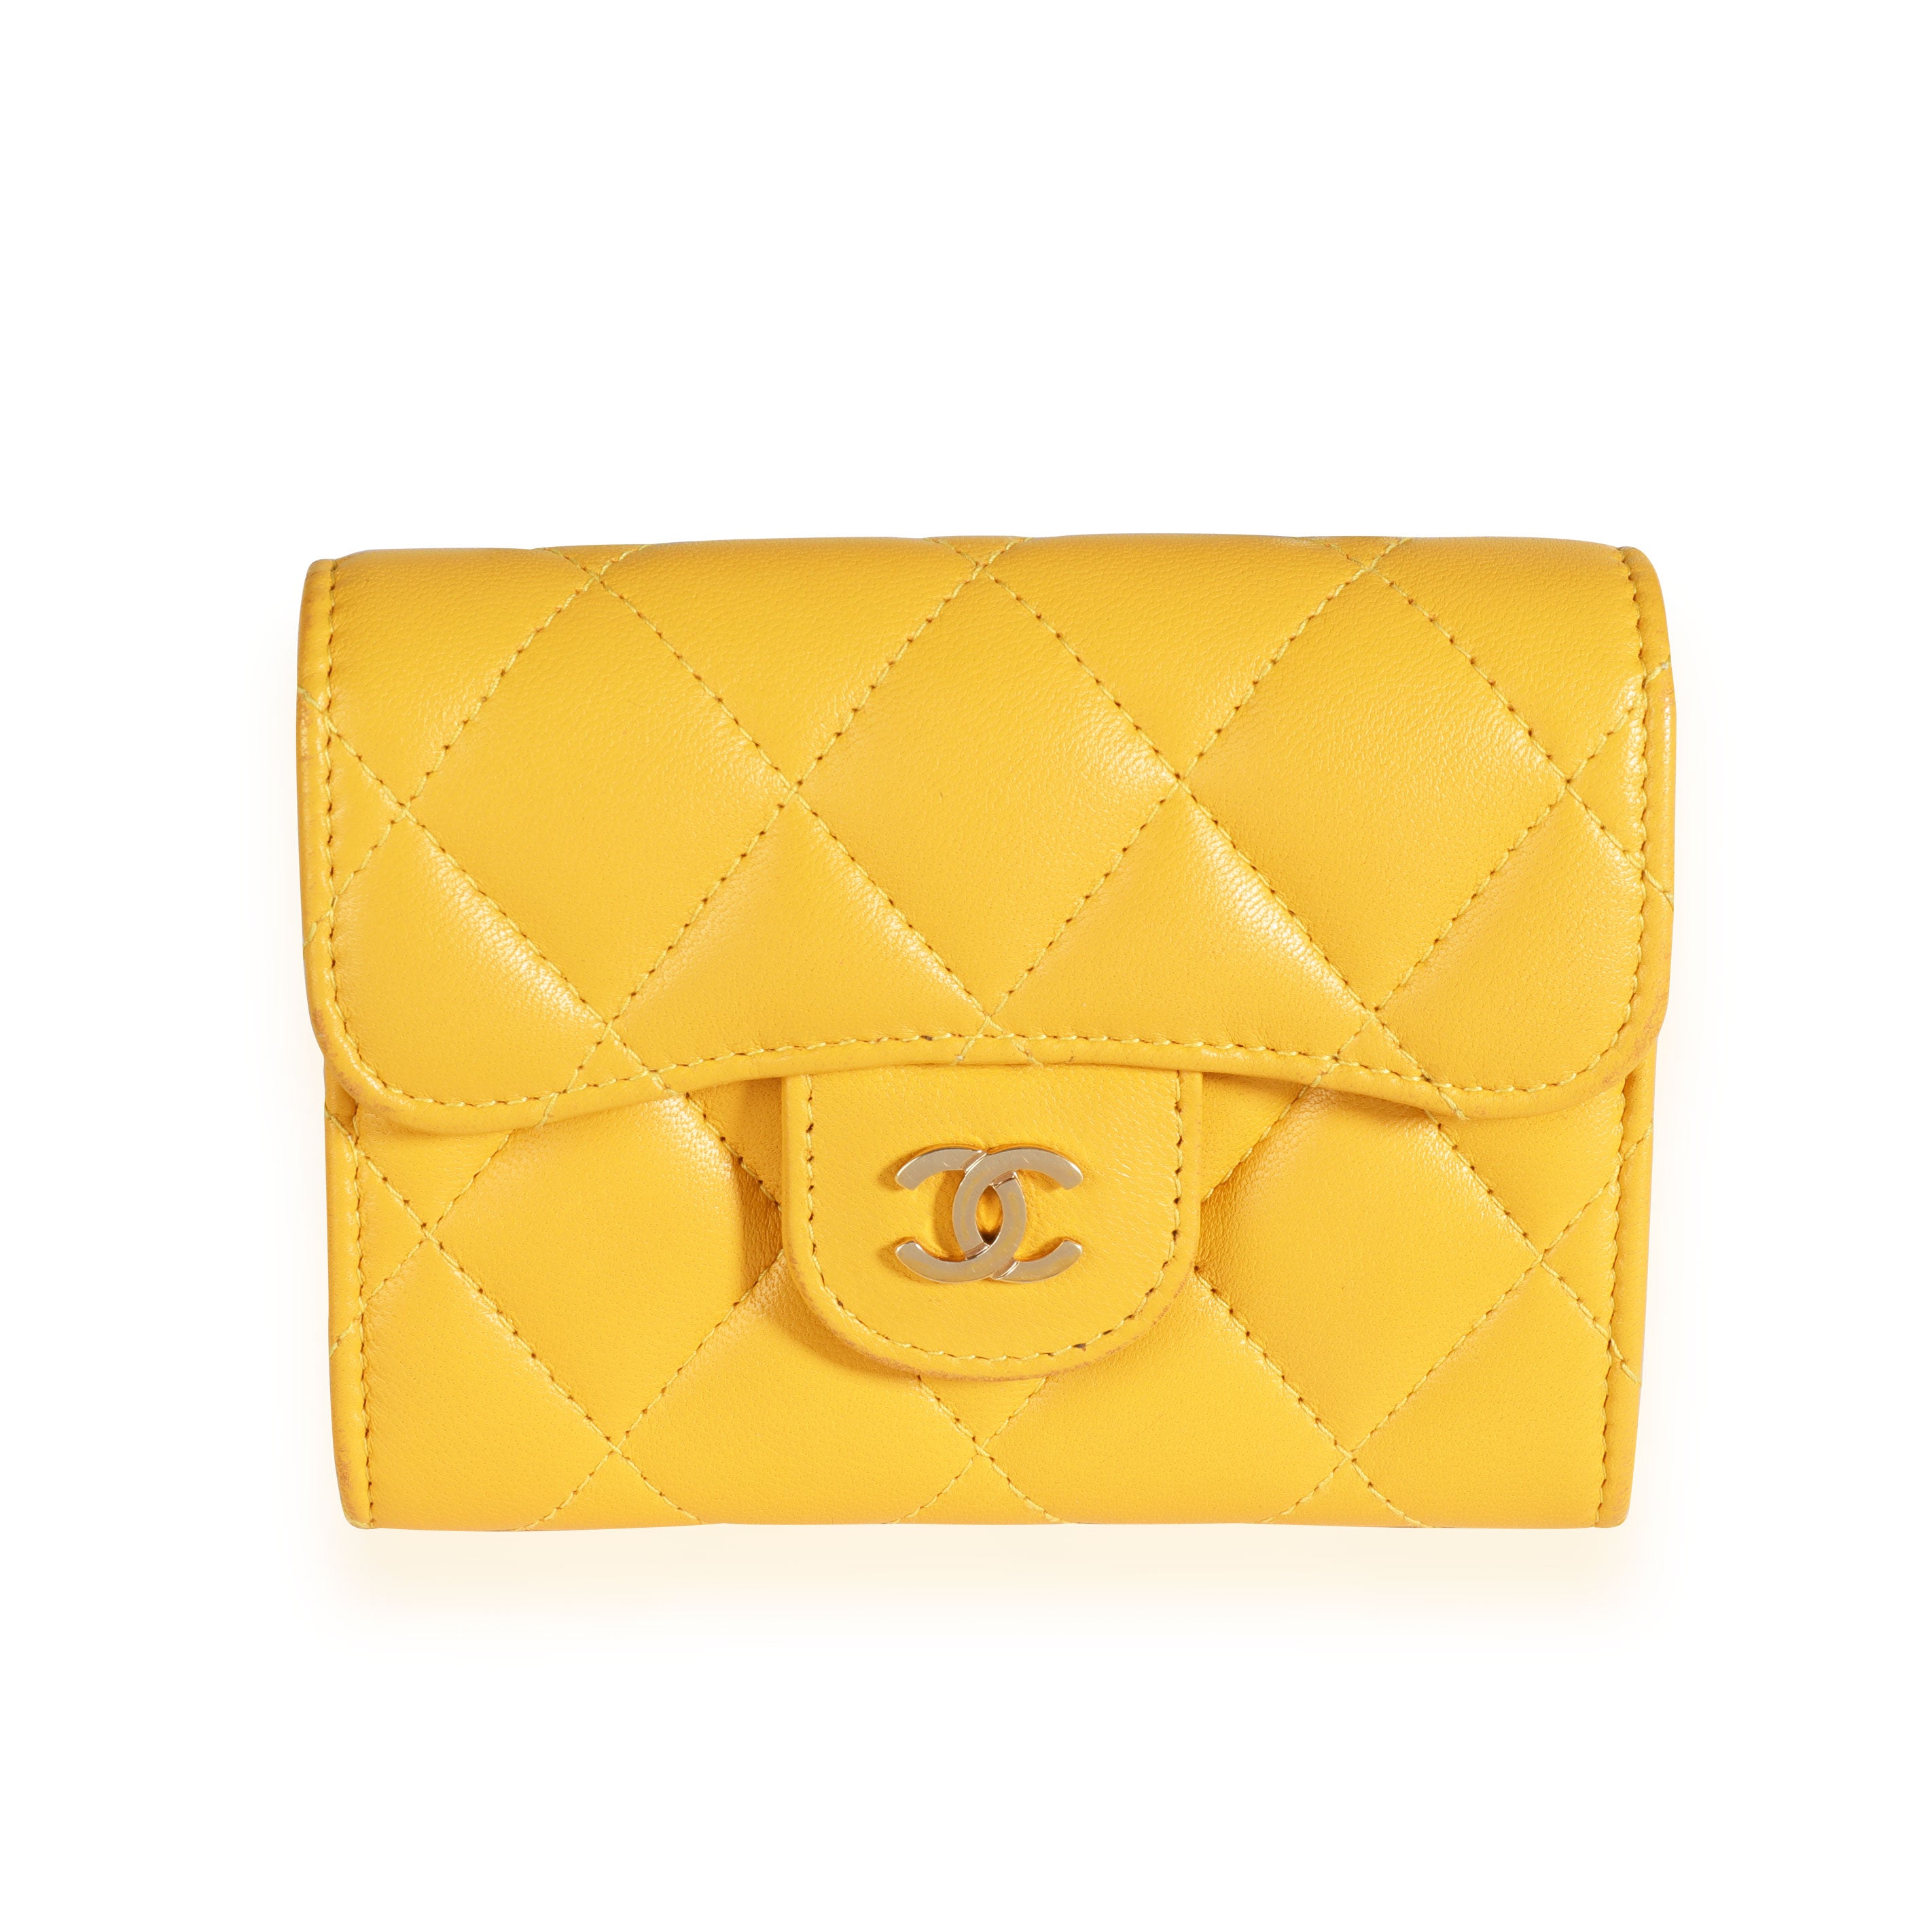 100 Authentic Chanel 19 Flap Wallet in Lambskin Black GHW Luxury Bags   Wallets on Carousell